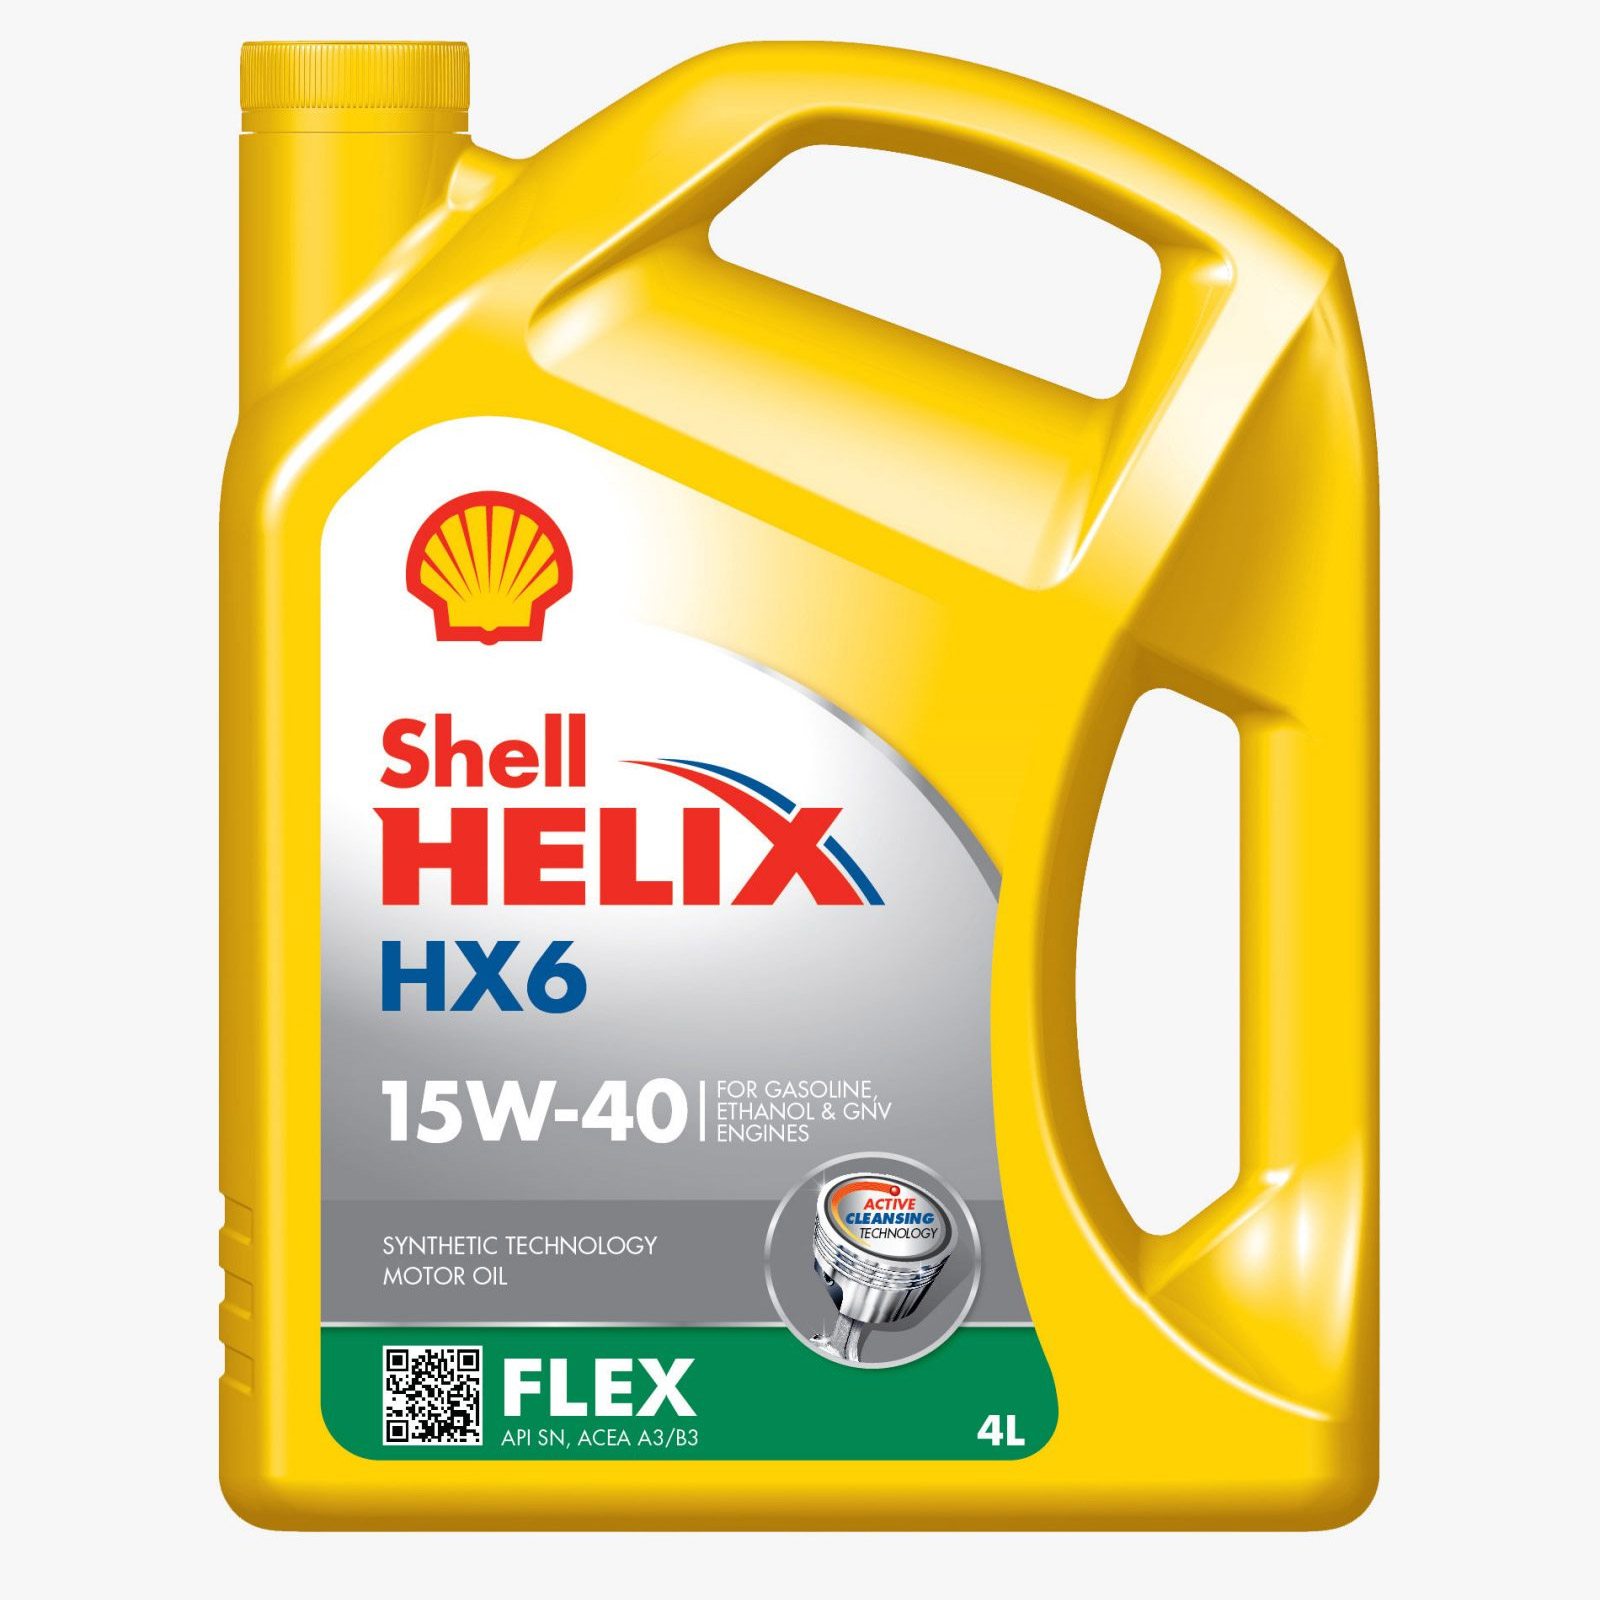 SHELL HELIX HX6 FLEX 15W-40